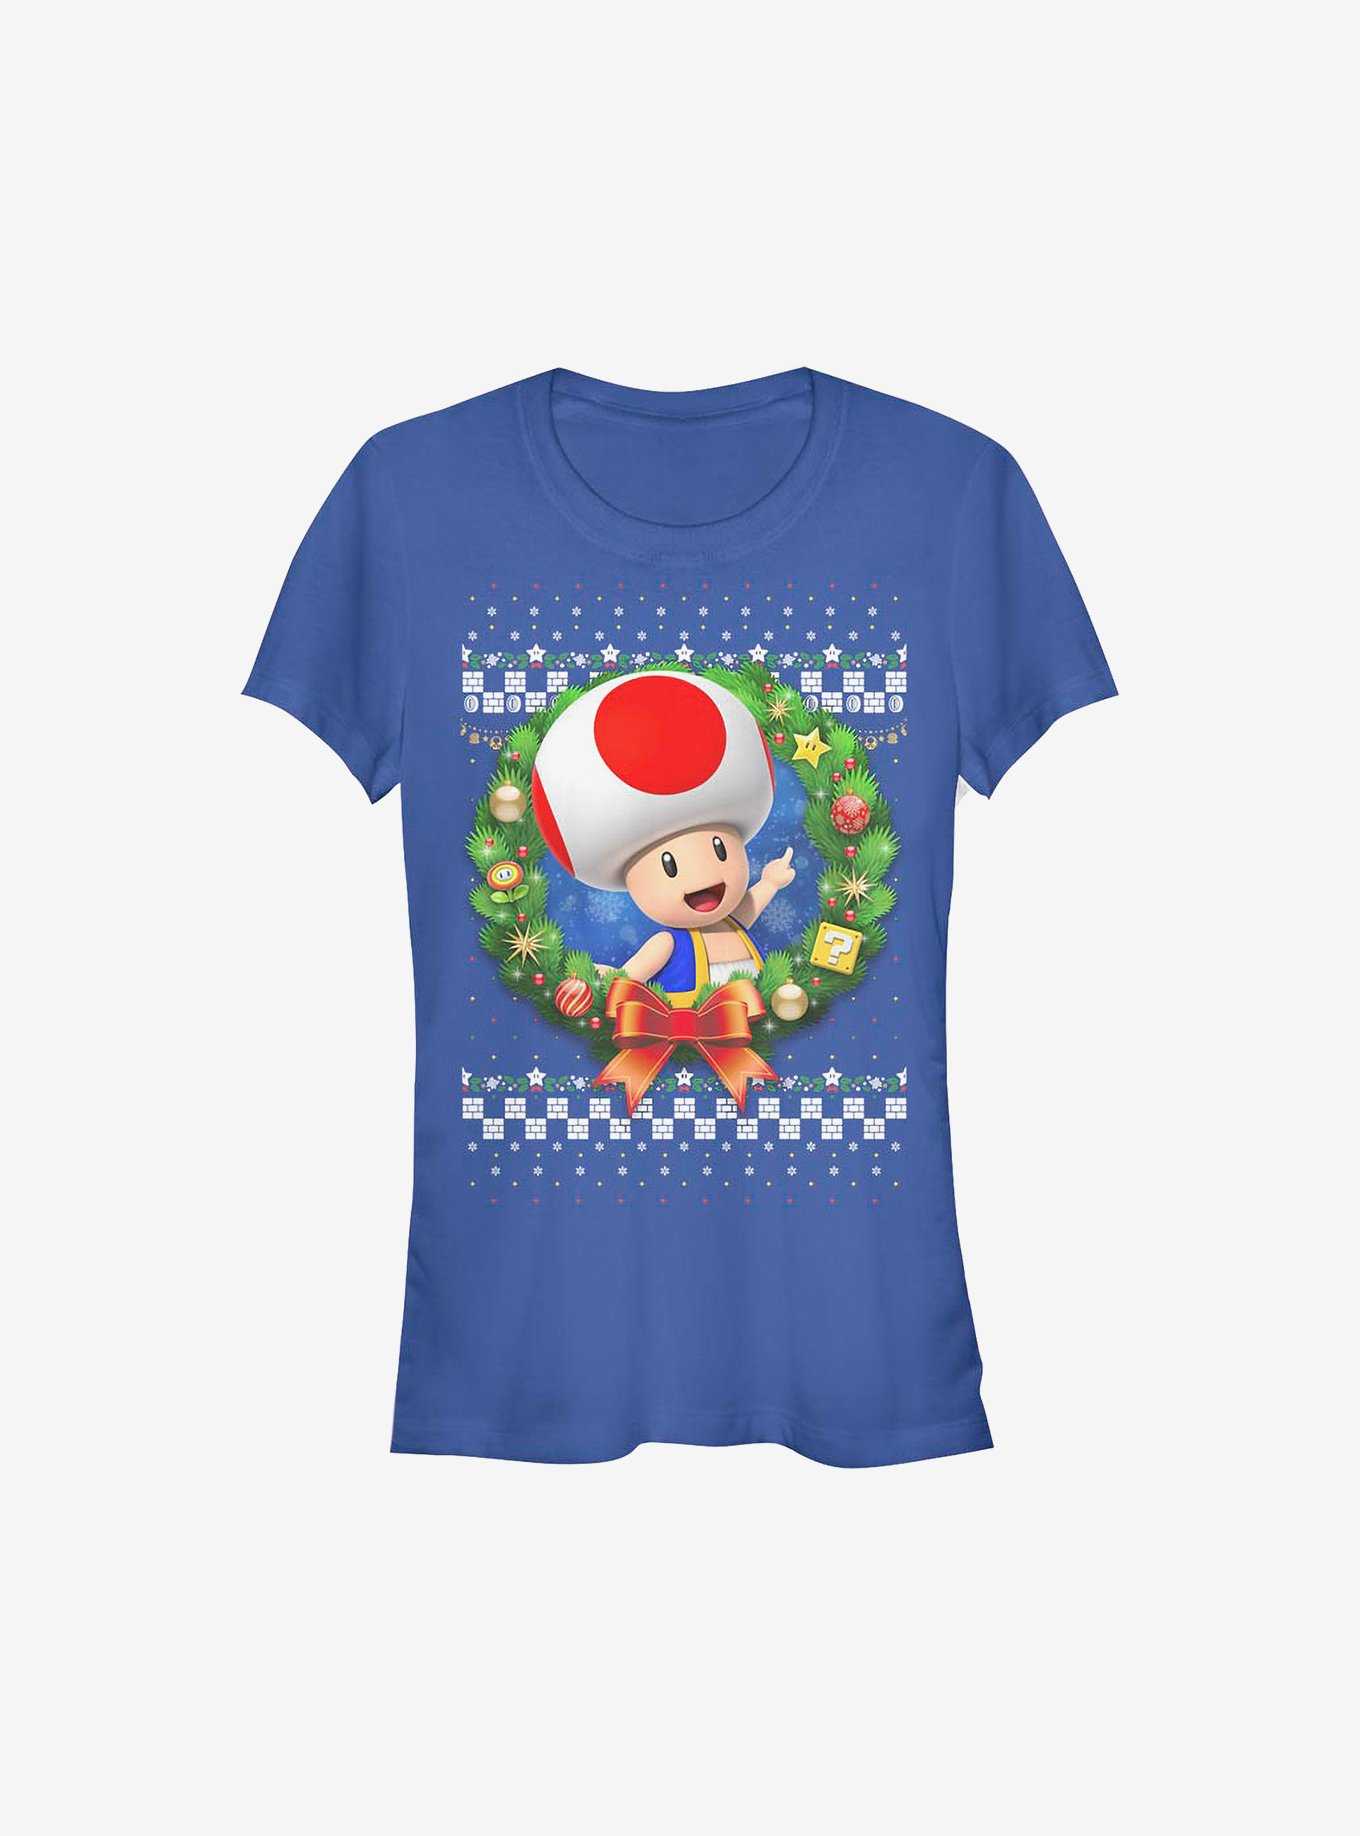 Super Mario Toad Wreath Holiday Girls T-Shirt, , hi-res